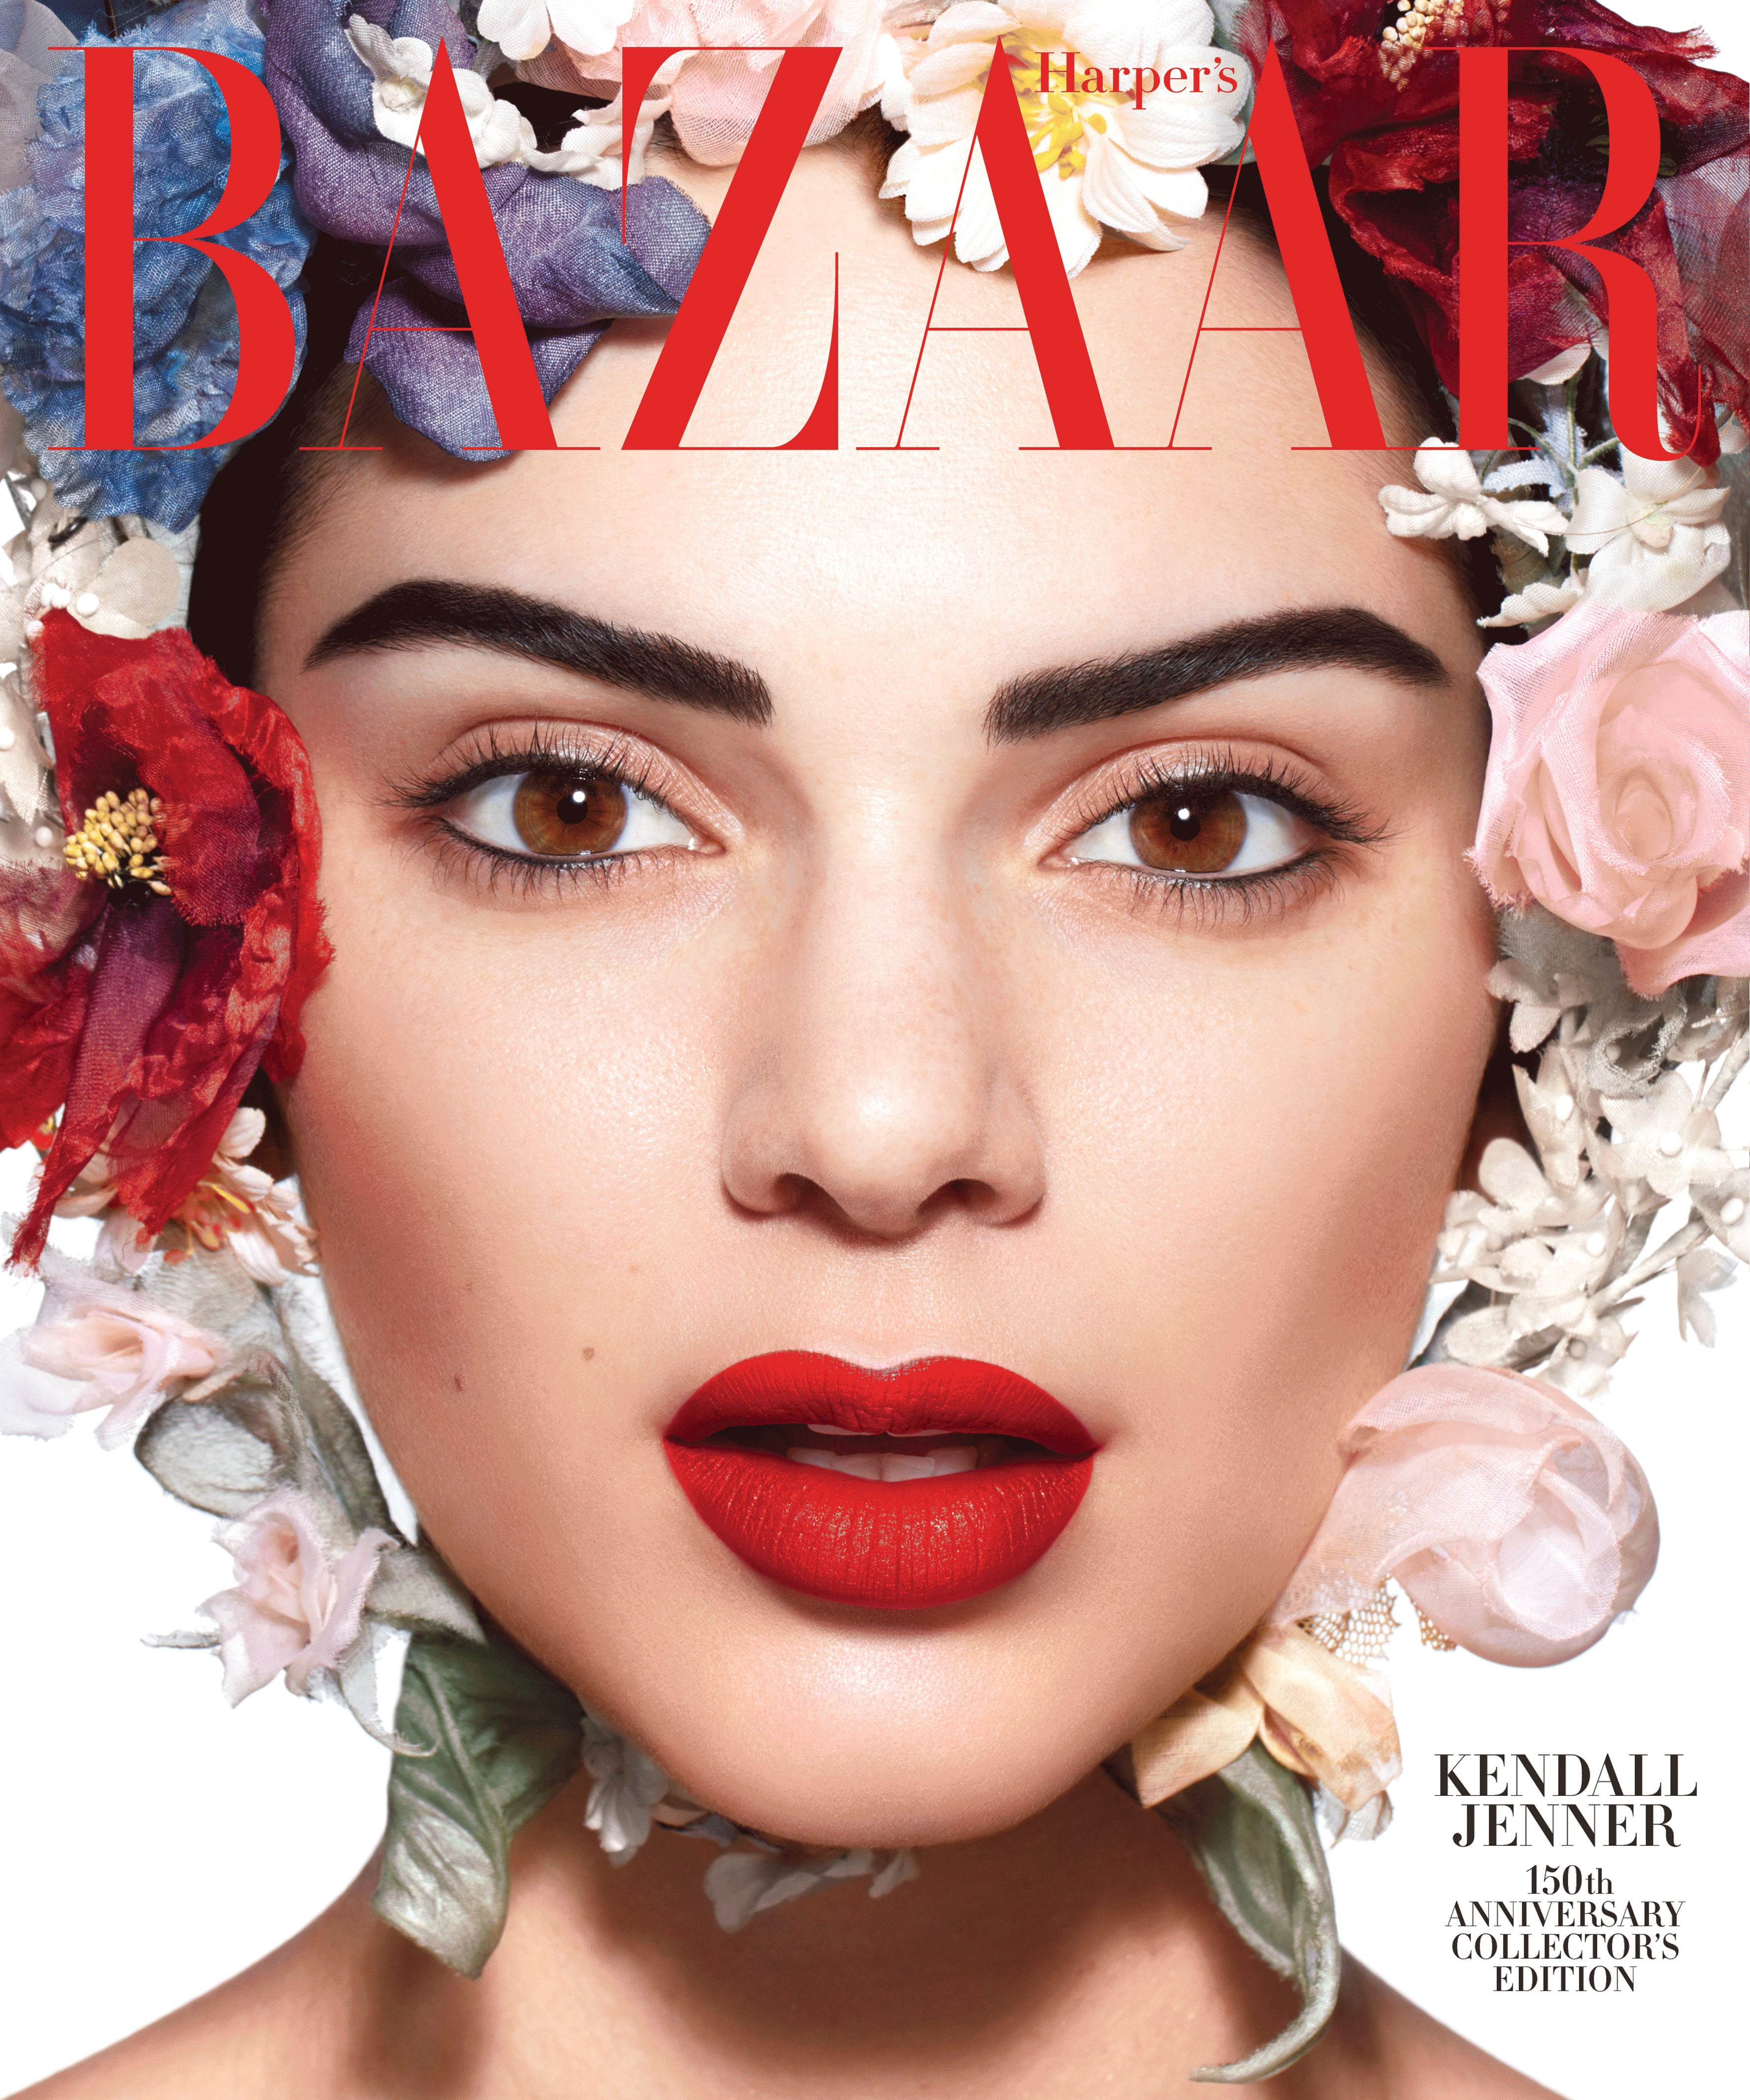 Harper's Bazaar - Kendall Jenner, May 2017